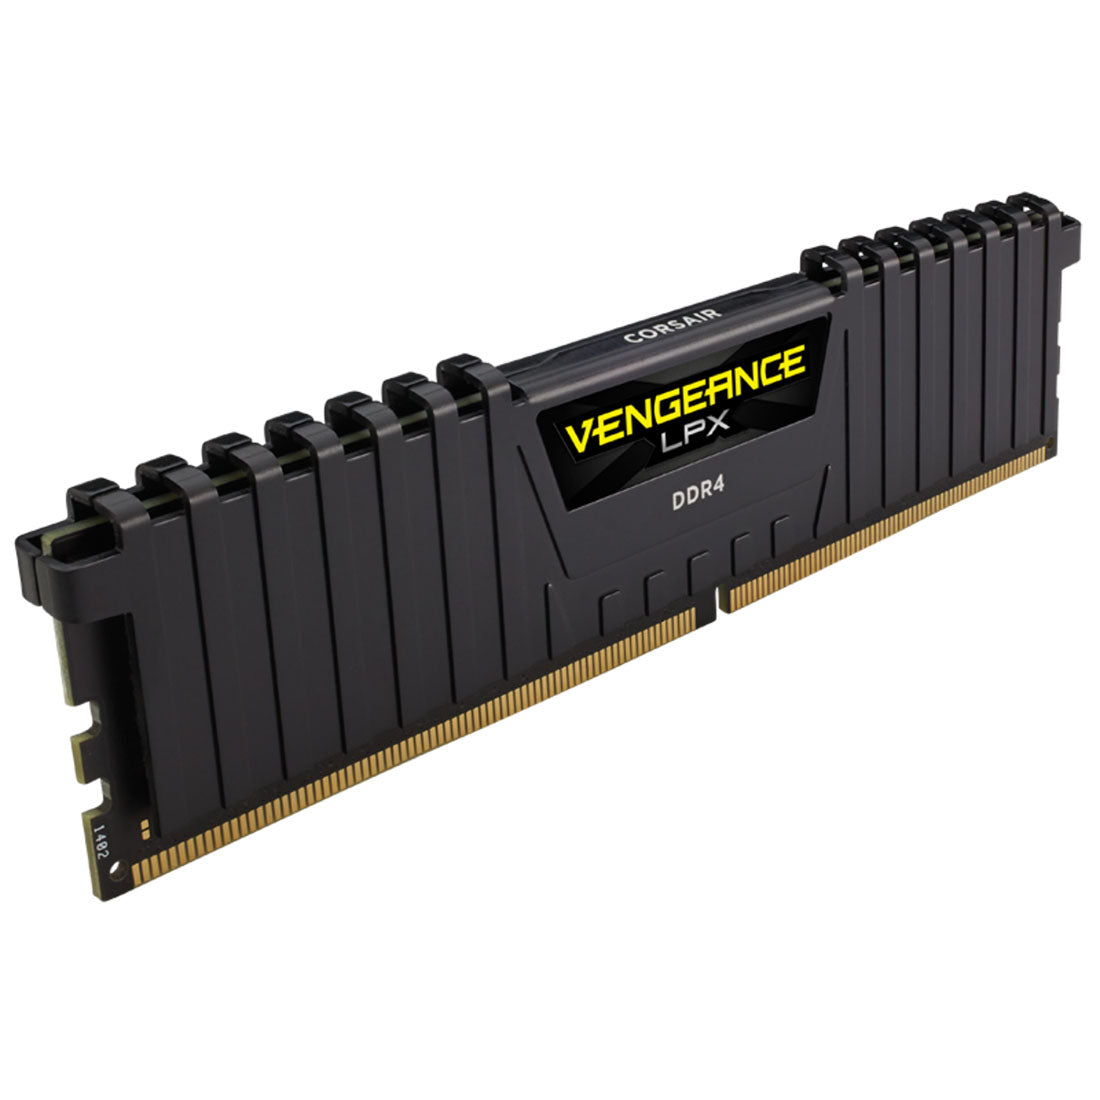 Corsair Vengeance LPX RAM 16GB DDR4 RAM 3000MHz डेस्कटॉप मेमोरी